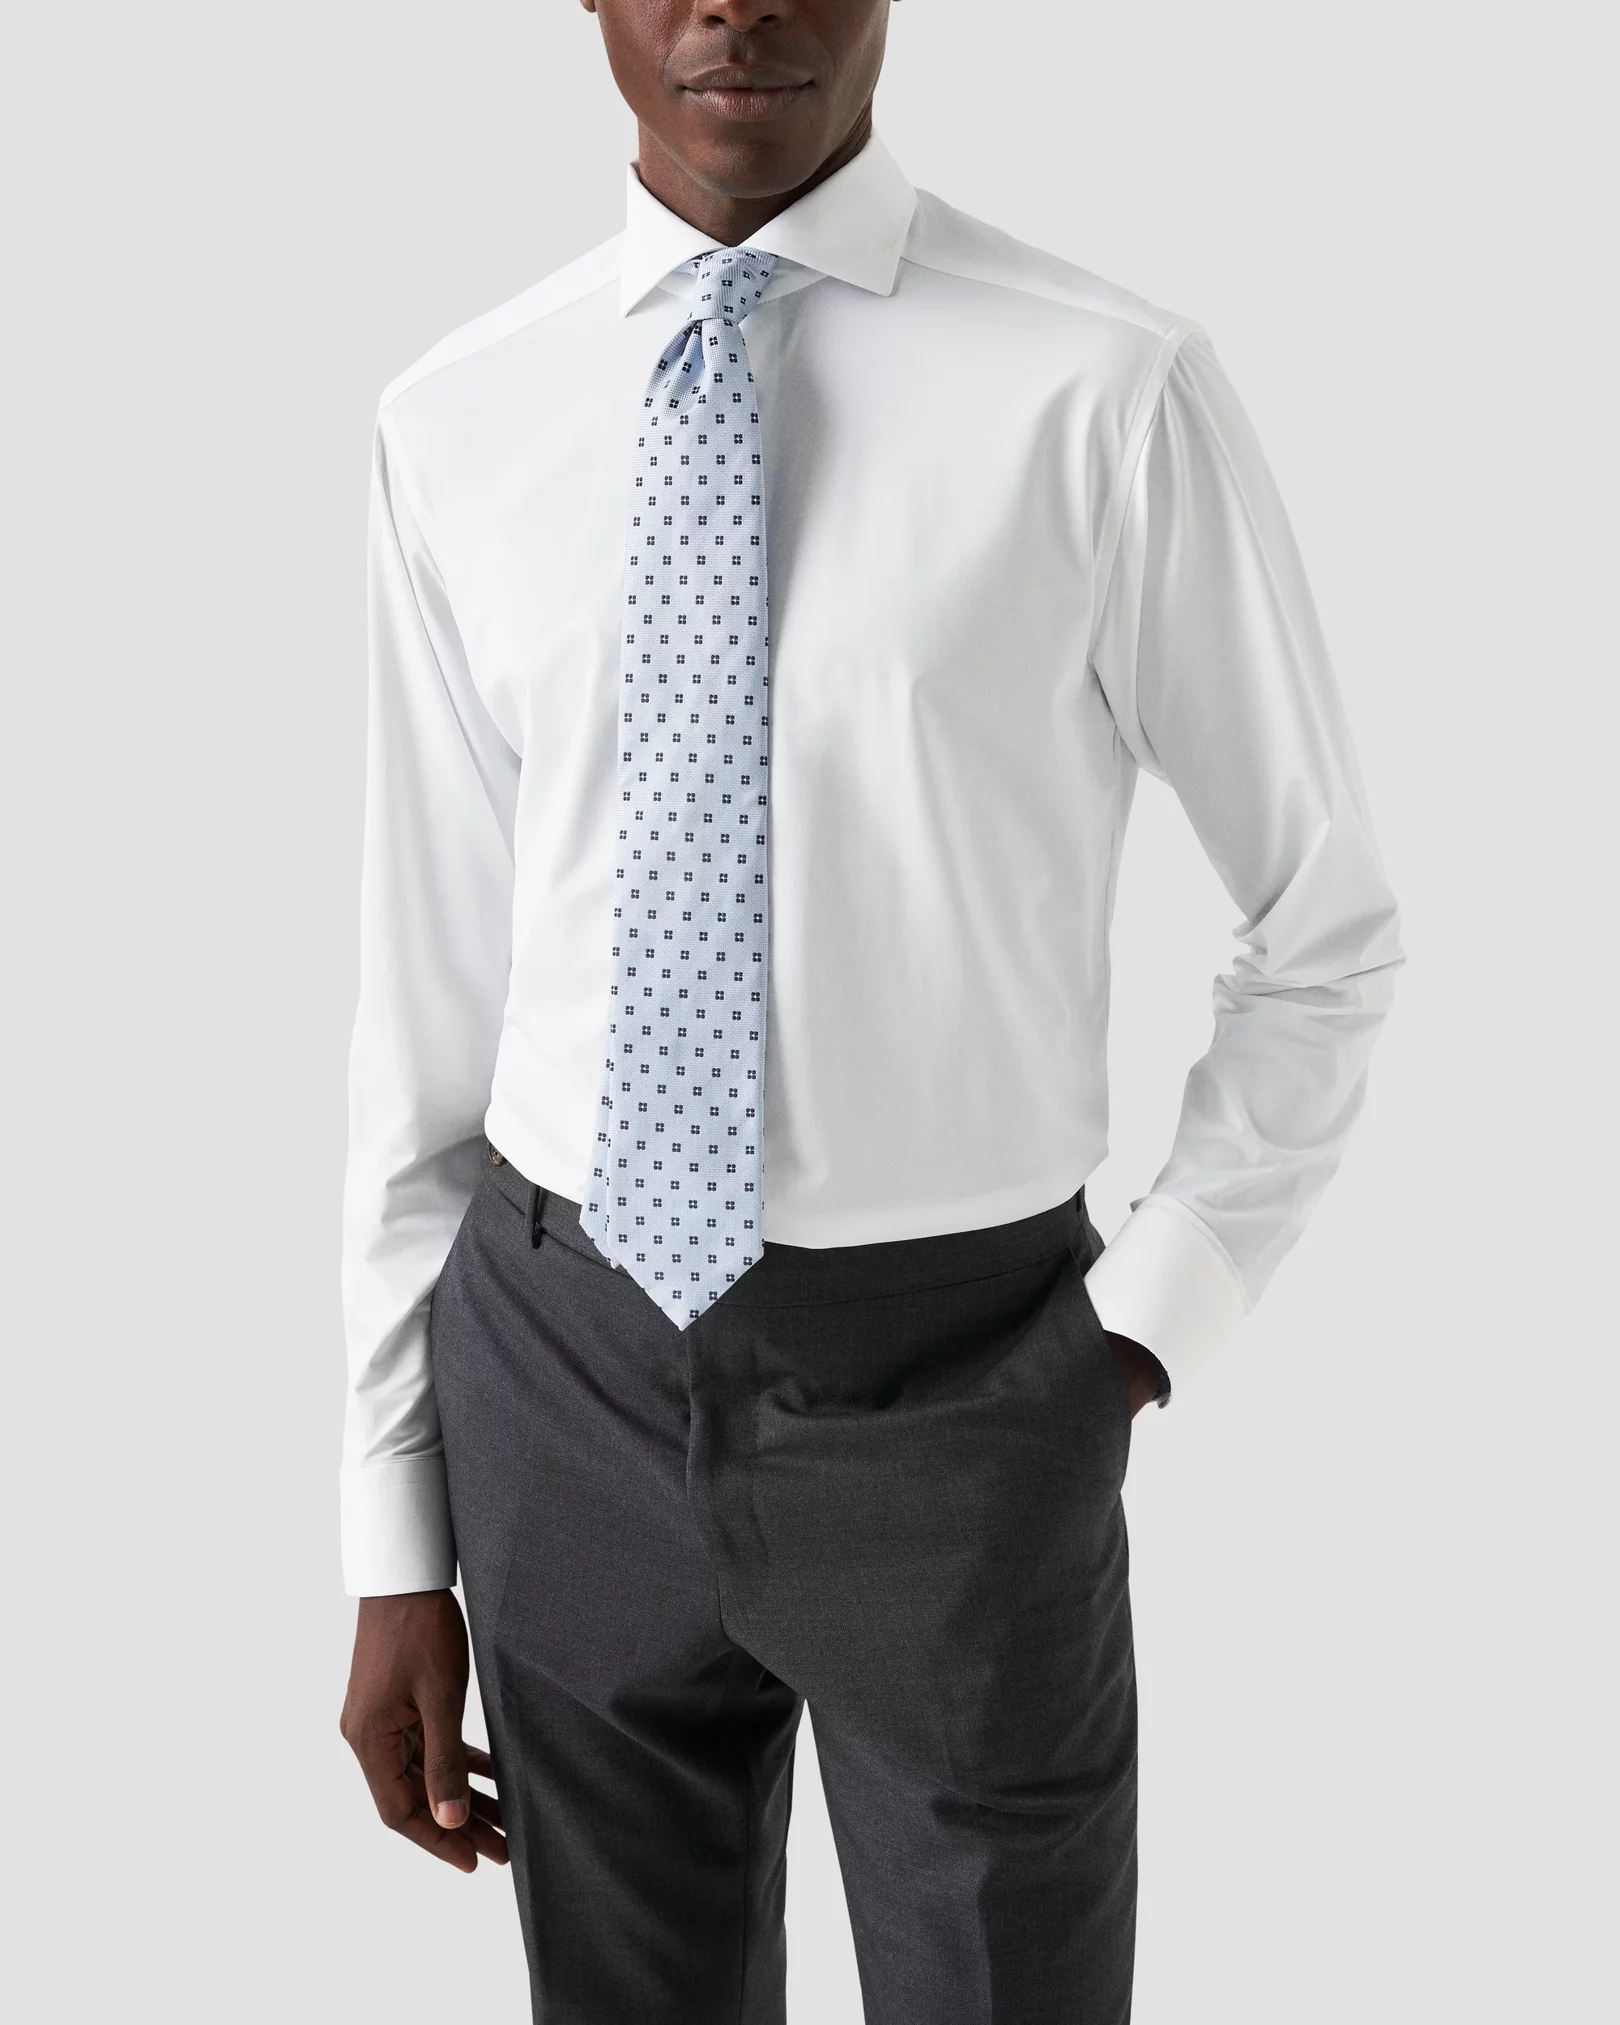 Eton - White Four-Way Stretch Shirt - Geometric Contrast Details